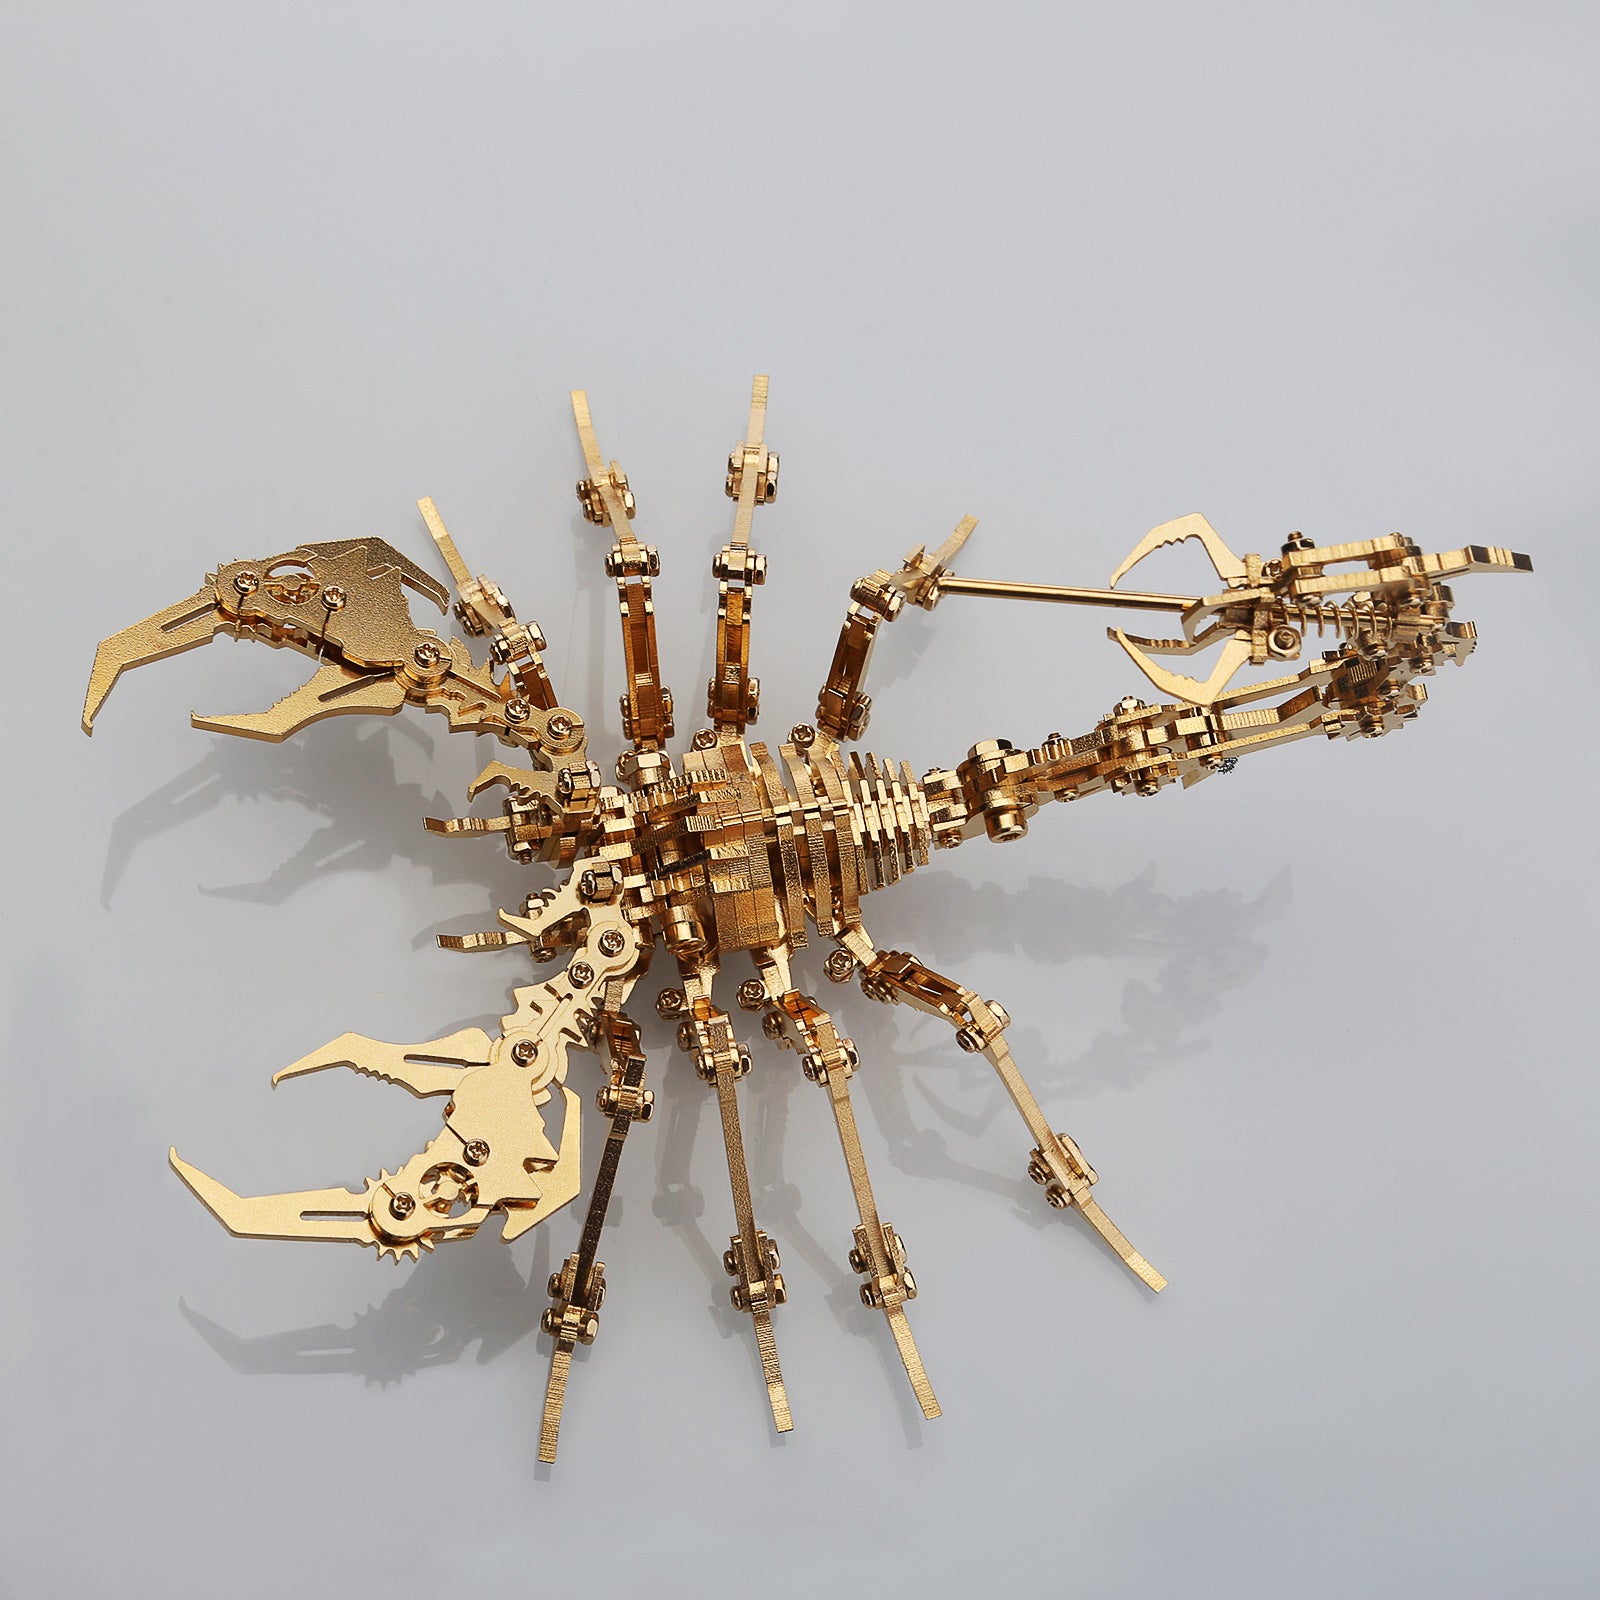 3D Metal Puzzle Goldern Scorpion King DIY Model Kit